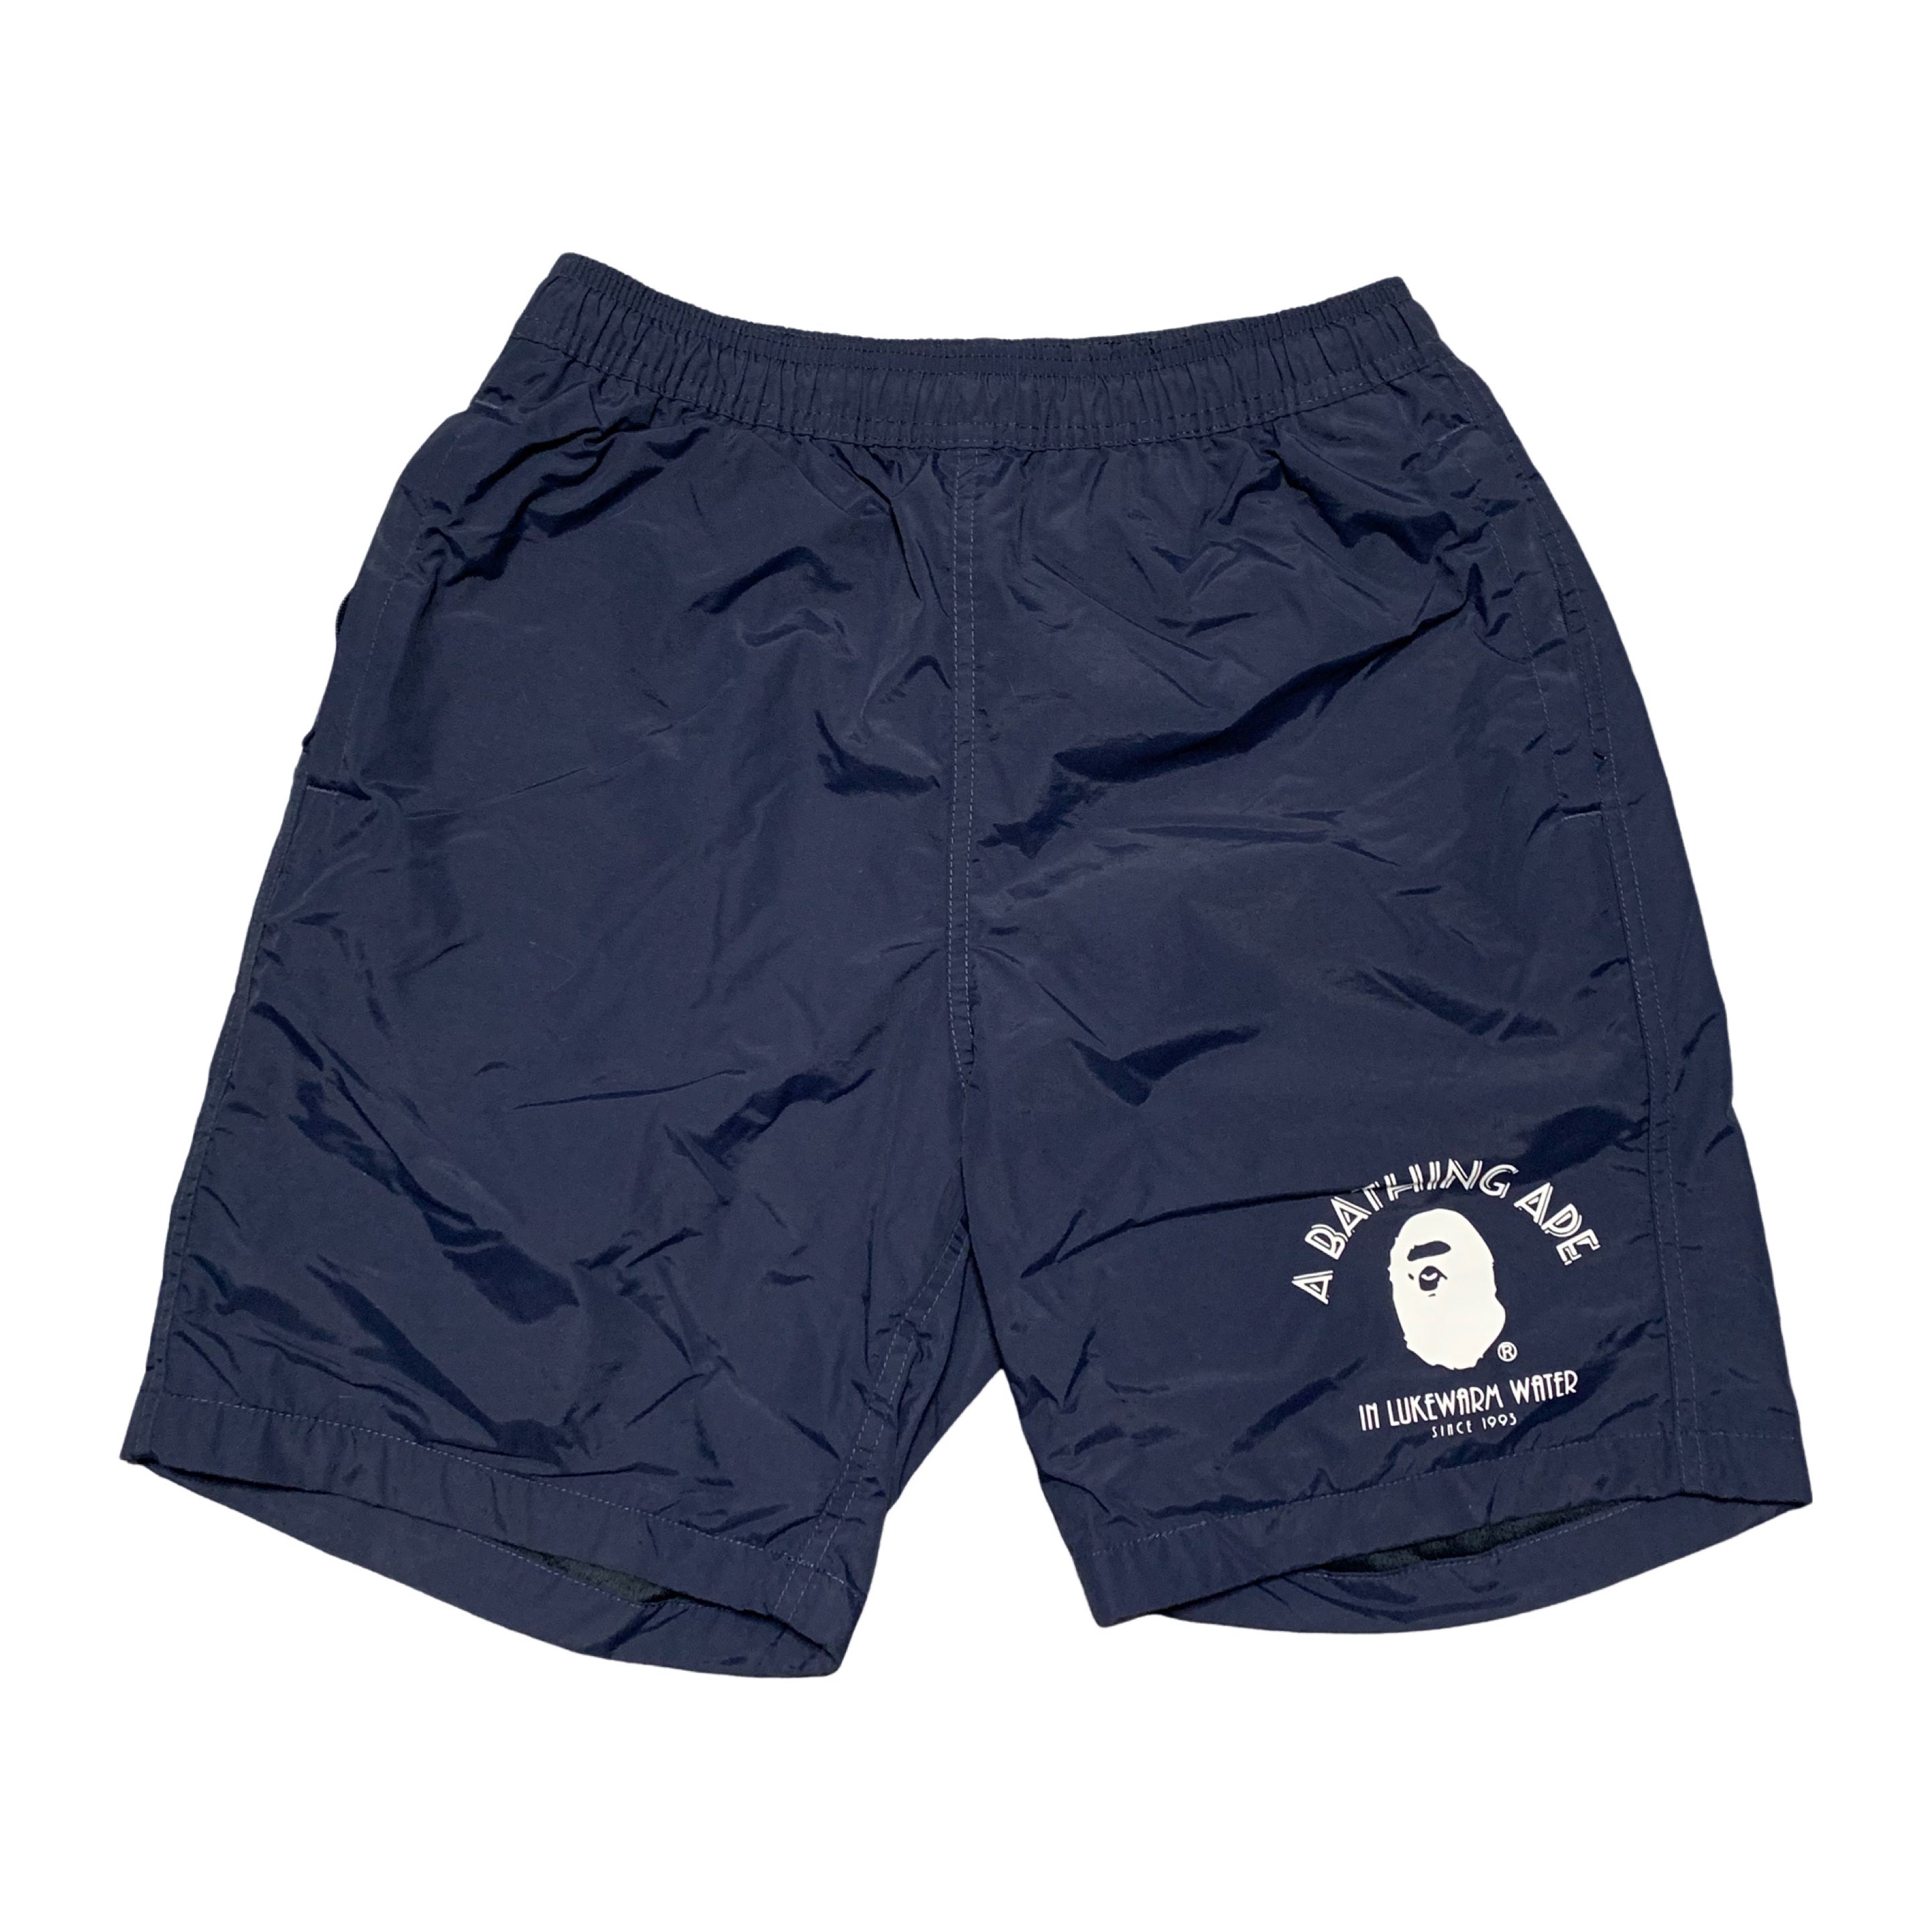 Bape Small Shorts Navy Blue Nylon Beach Shorts A Bathing Ape